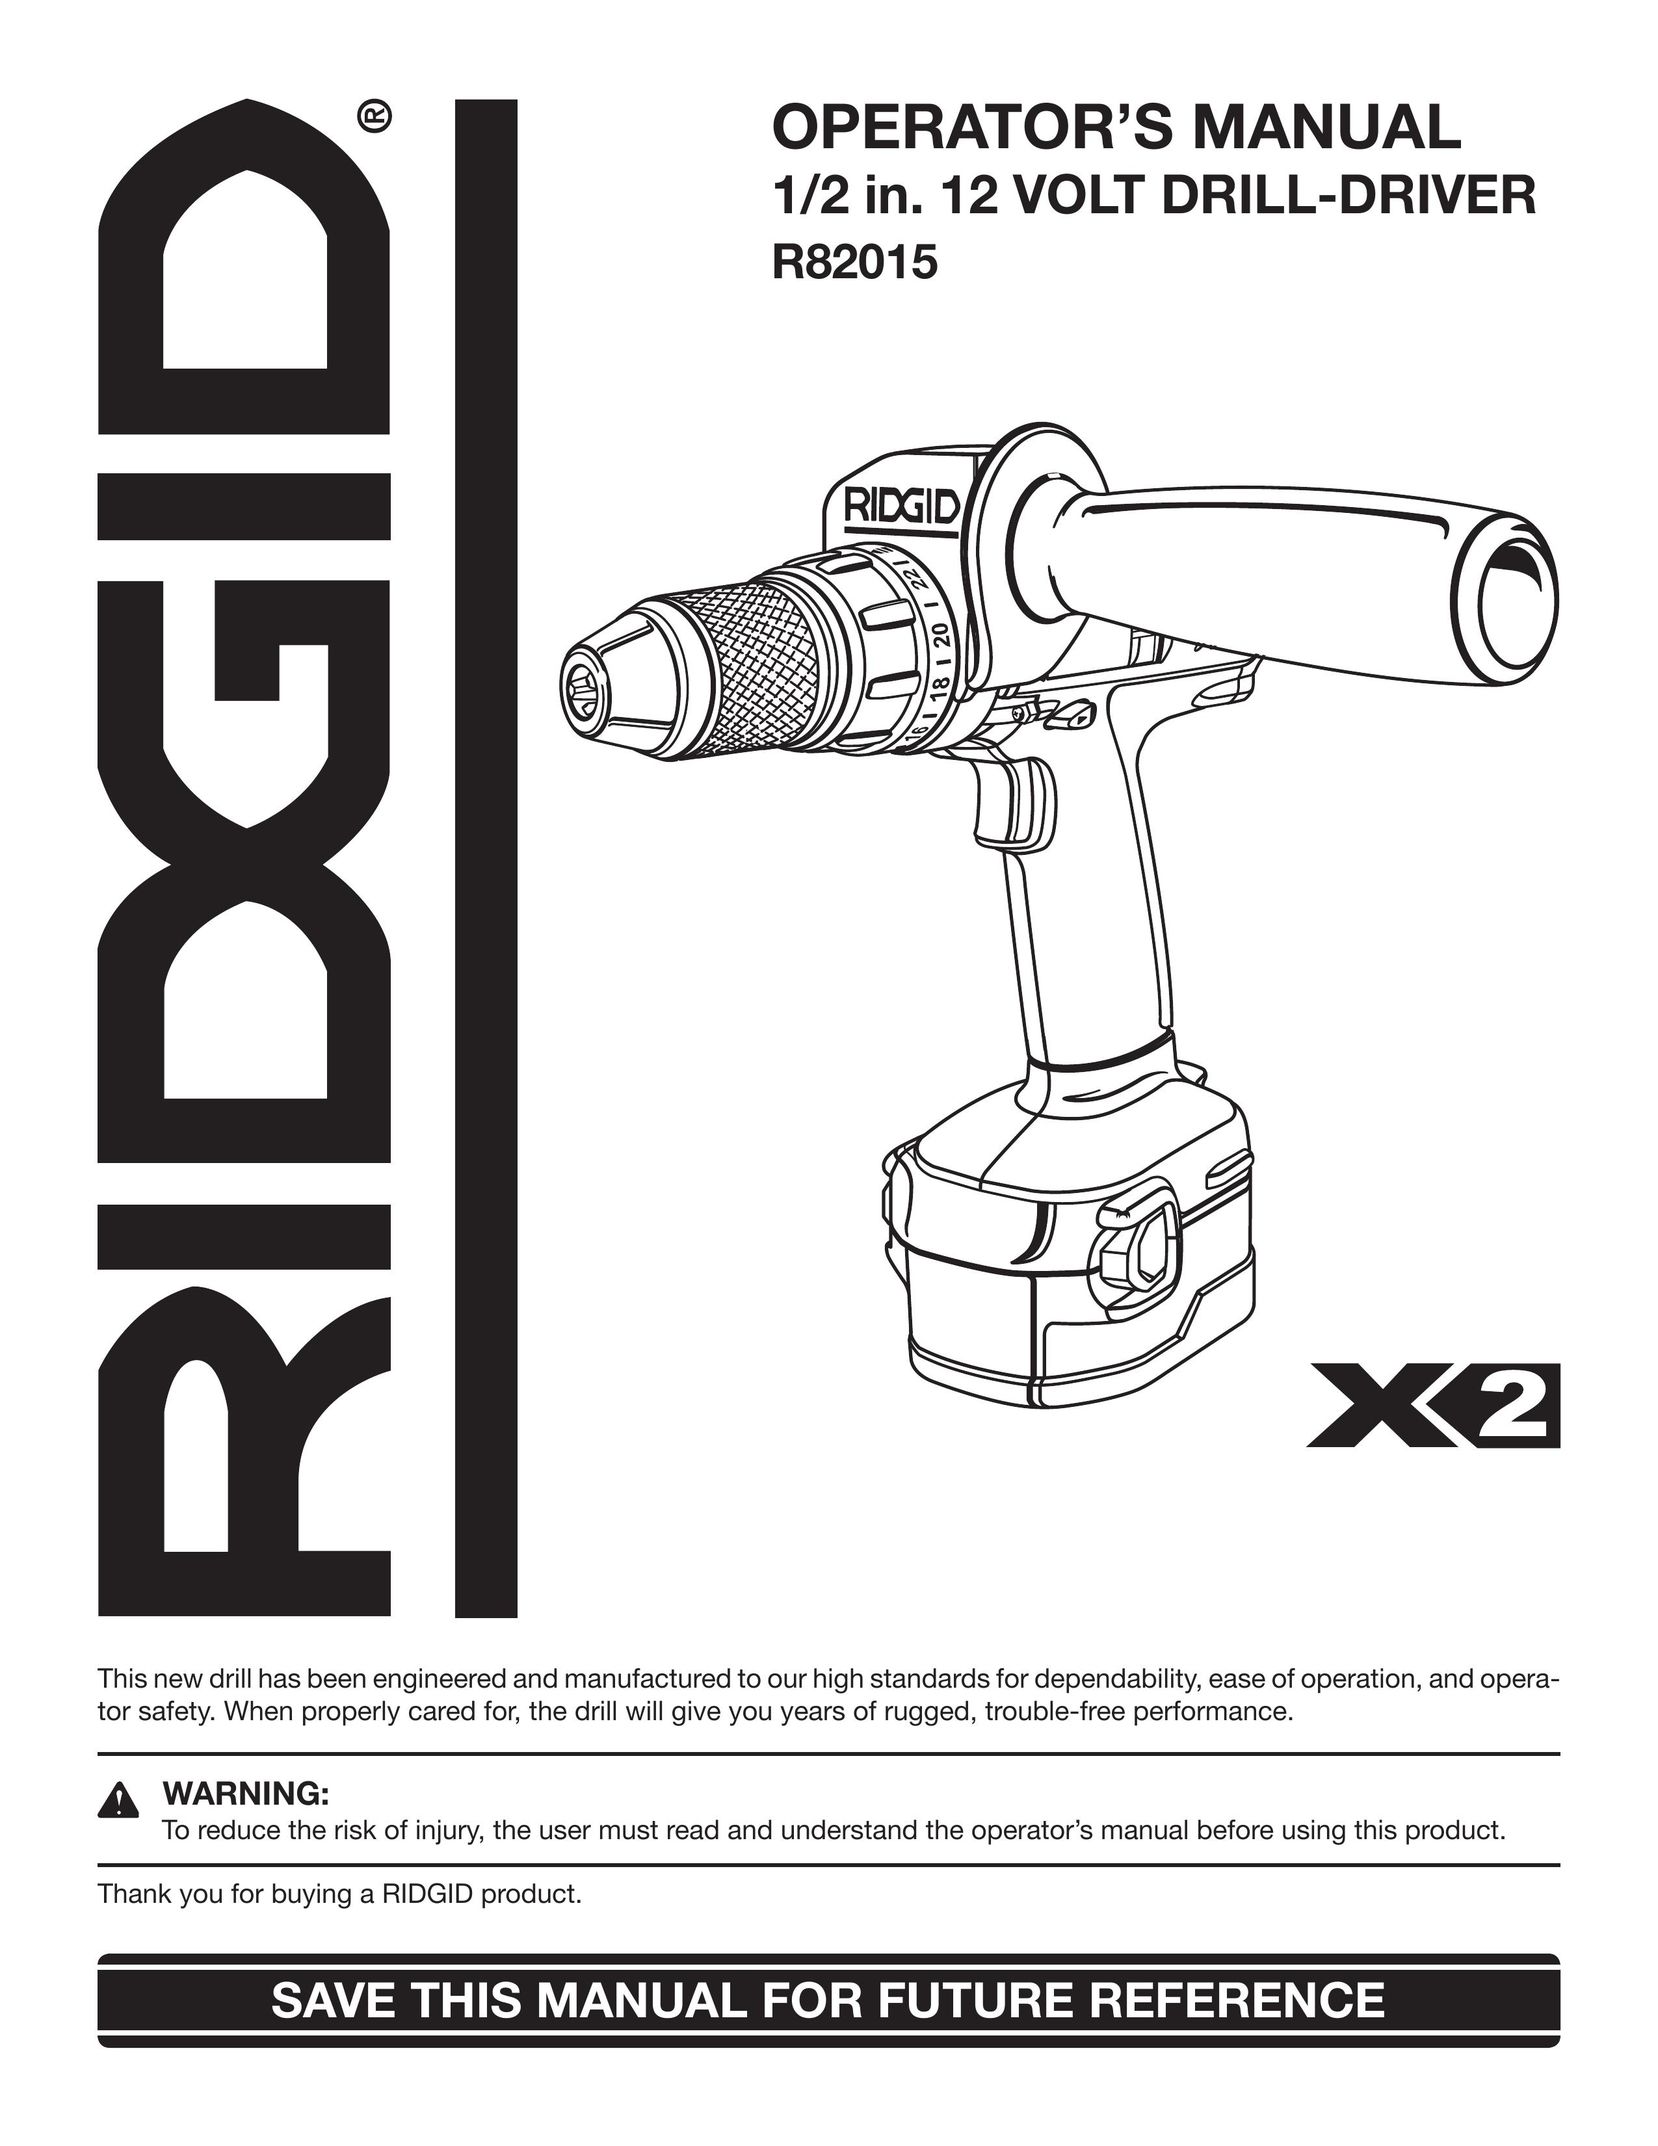 RIDGID R82015 Drill User Manual